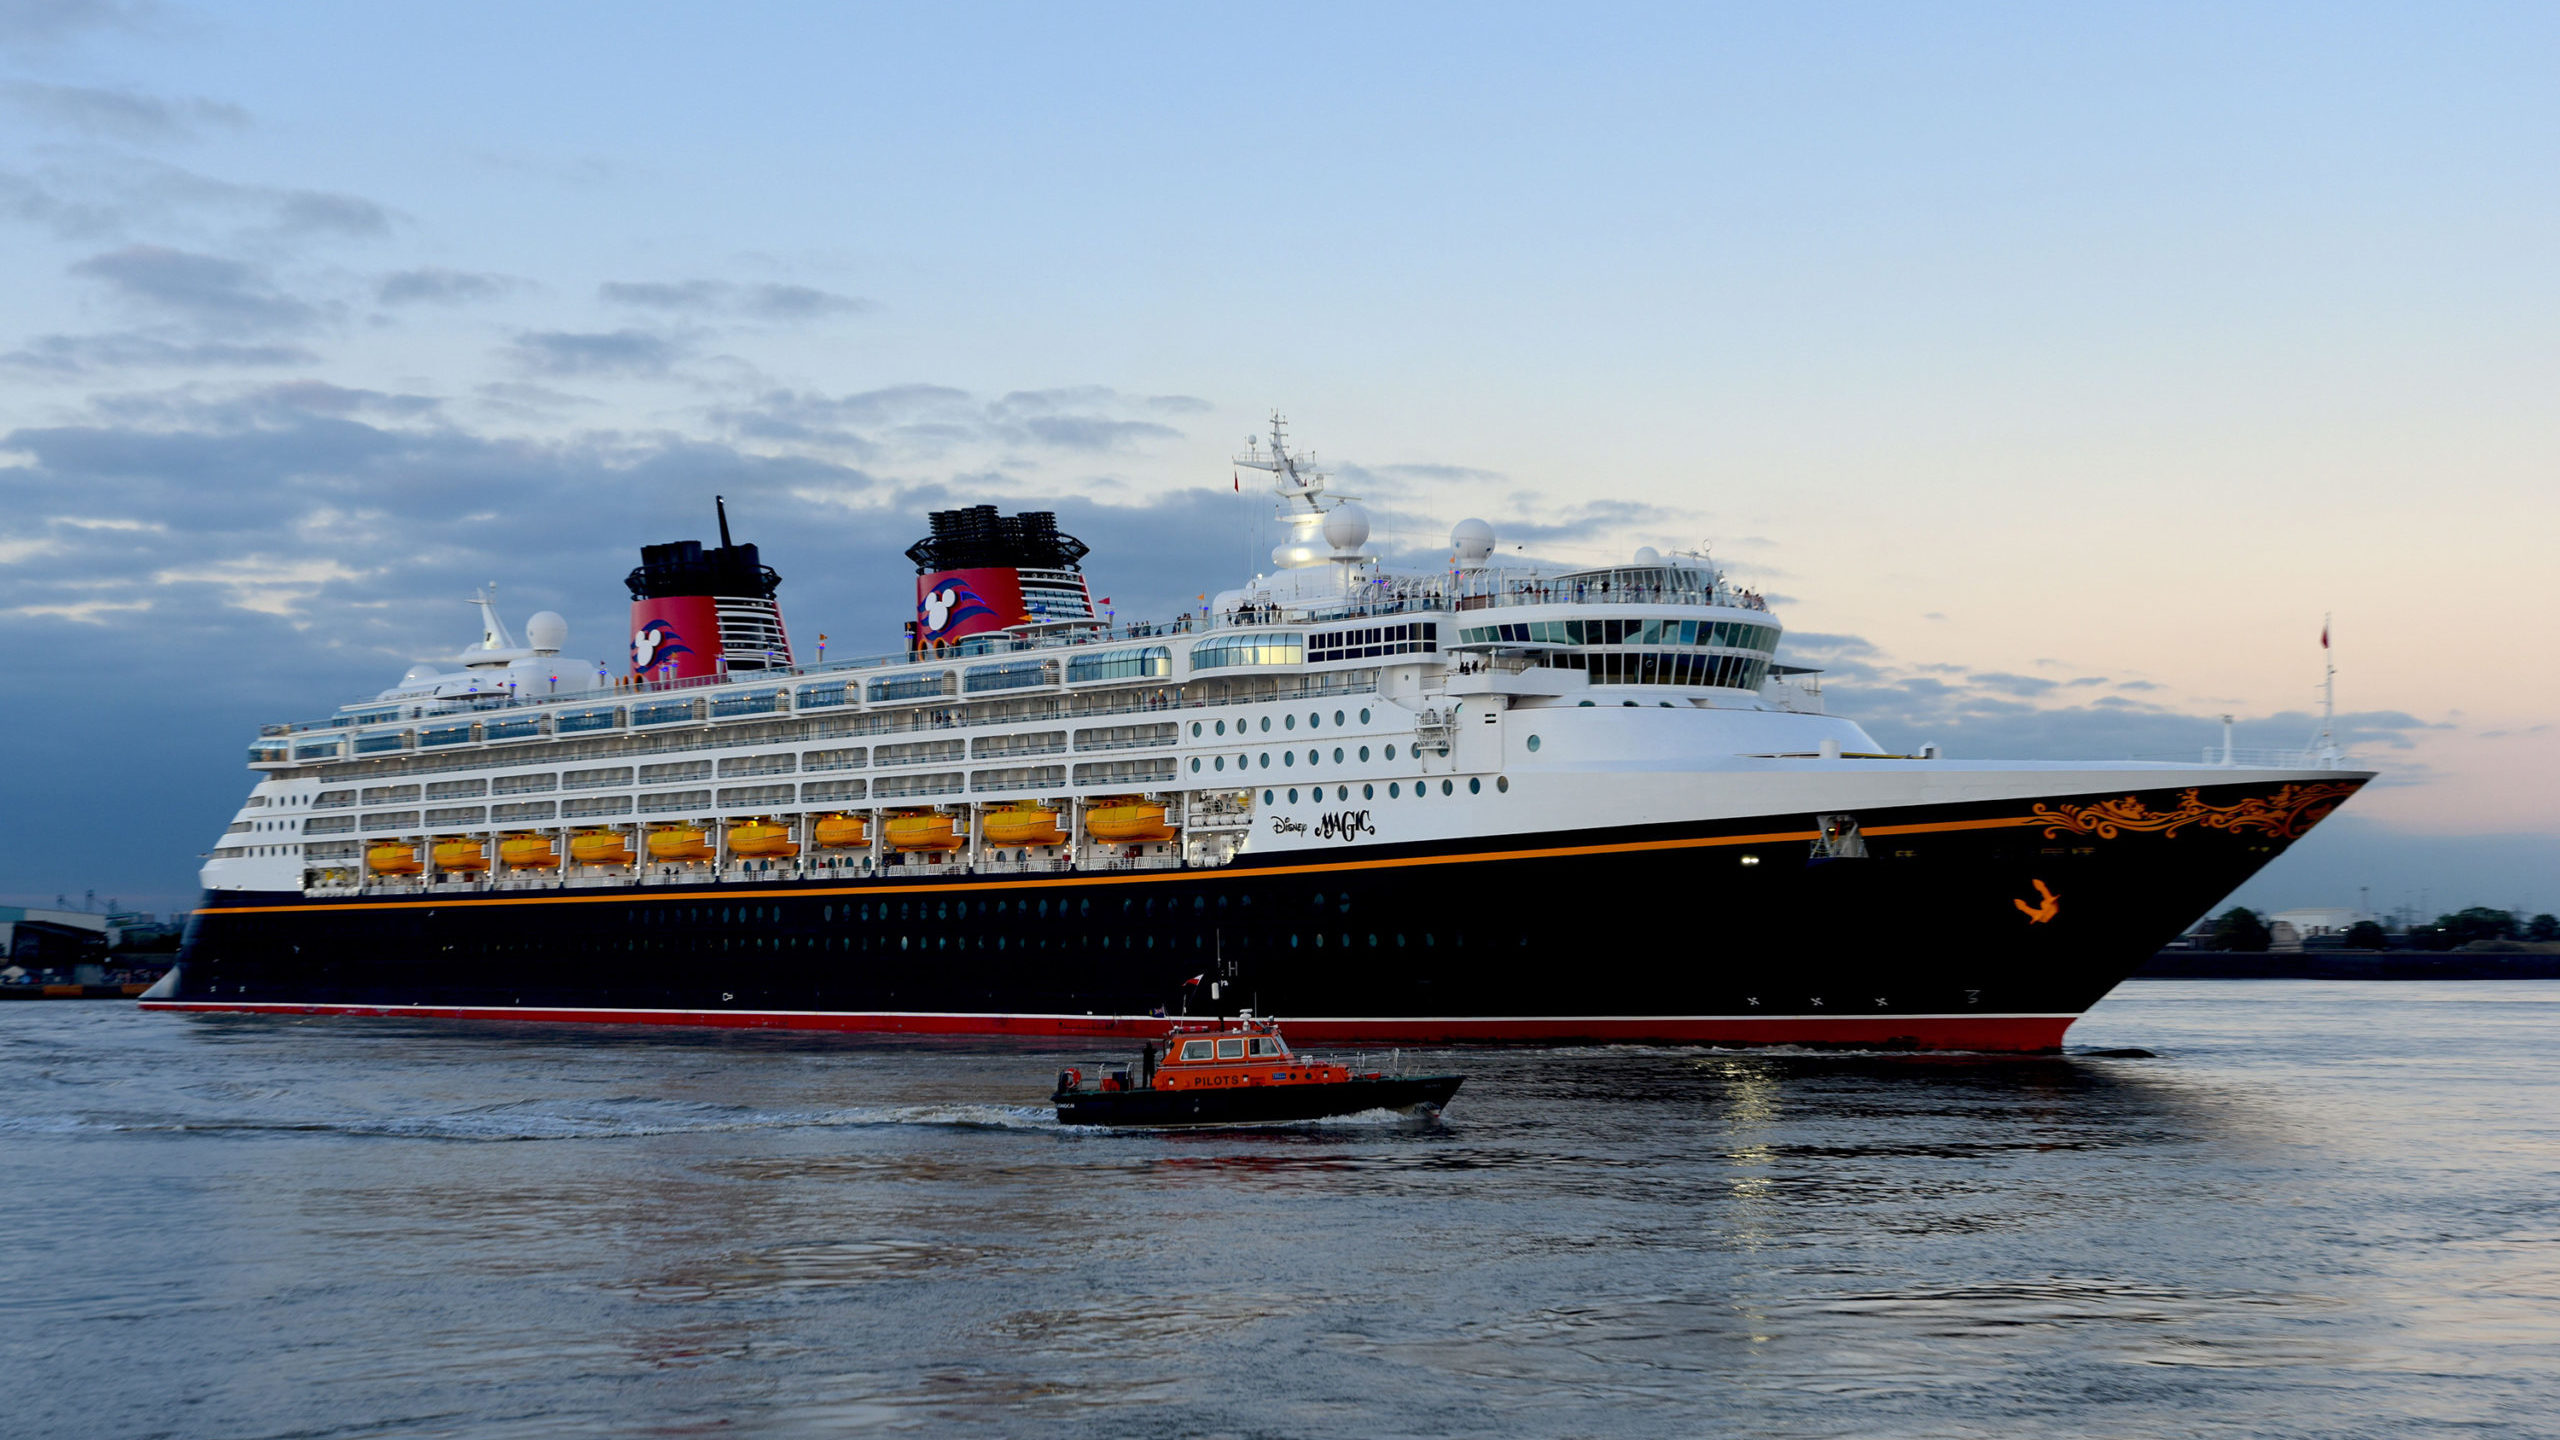 Mandatory Credit: Photo by Fraser Gray/Shutterstock (12465401k)
Disney Magic's cruises from Tilbury...